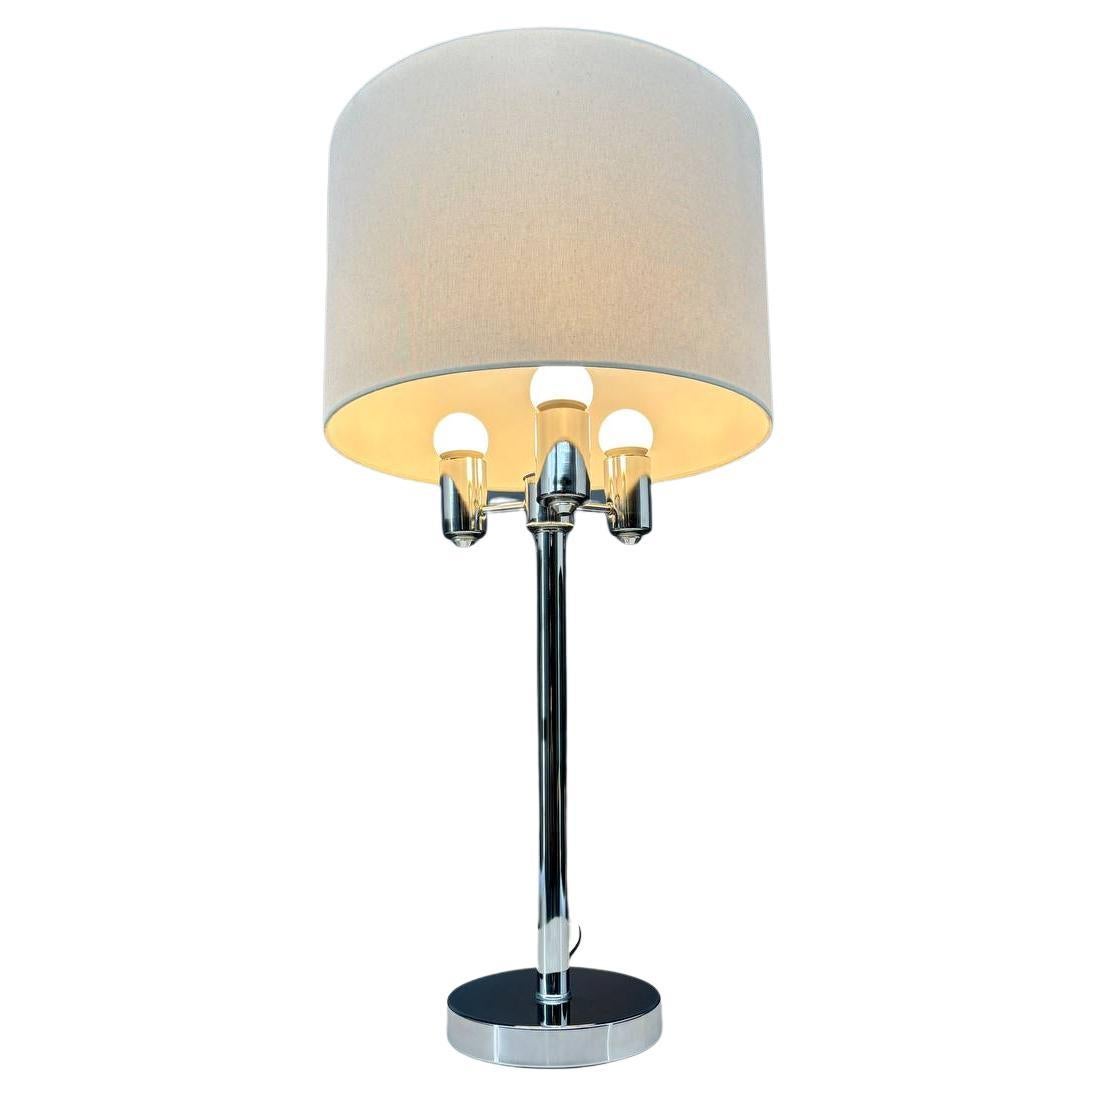 Mid-Century Modern Chrome Table Lamp